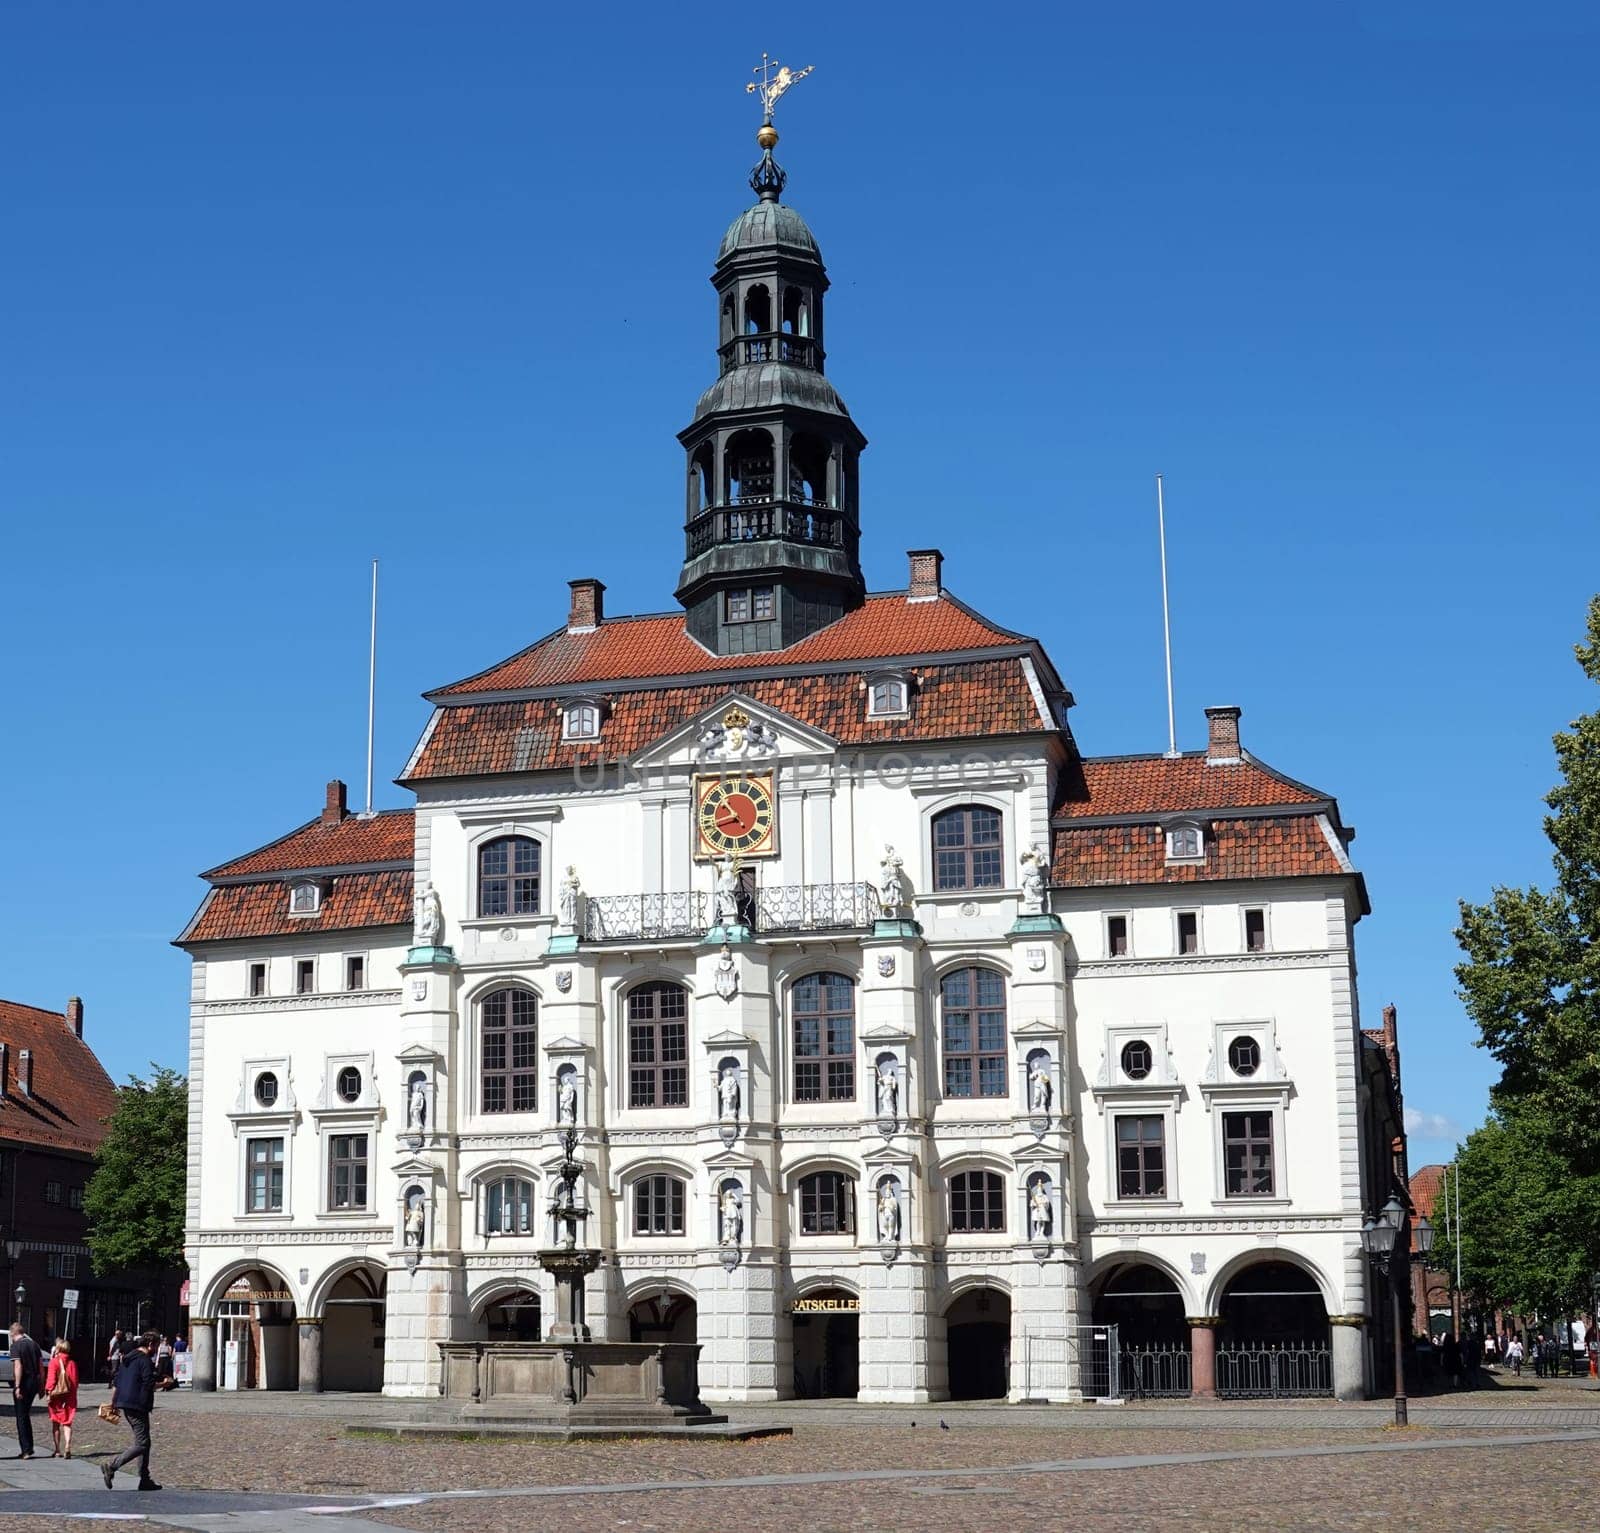 townhall of Lueneburg by WielandTeixeira